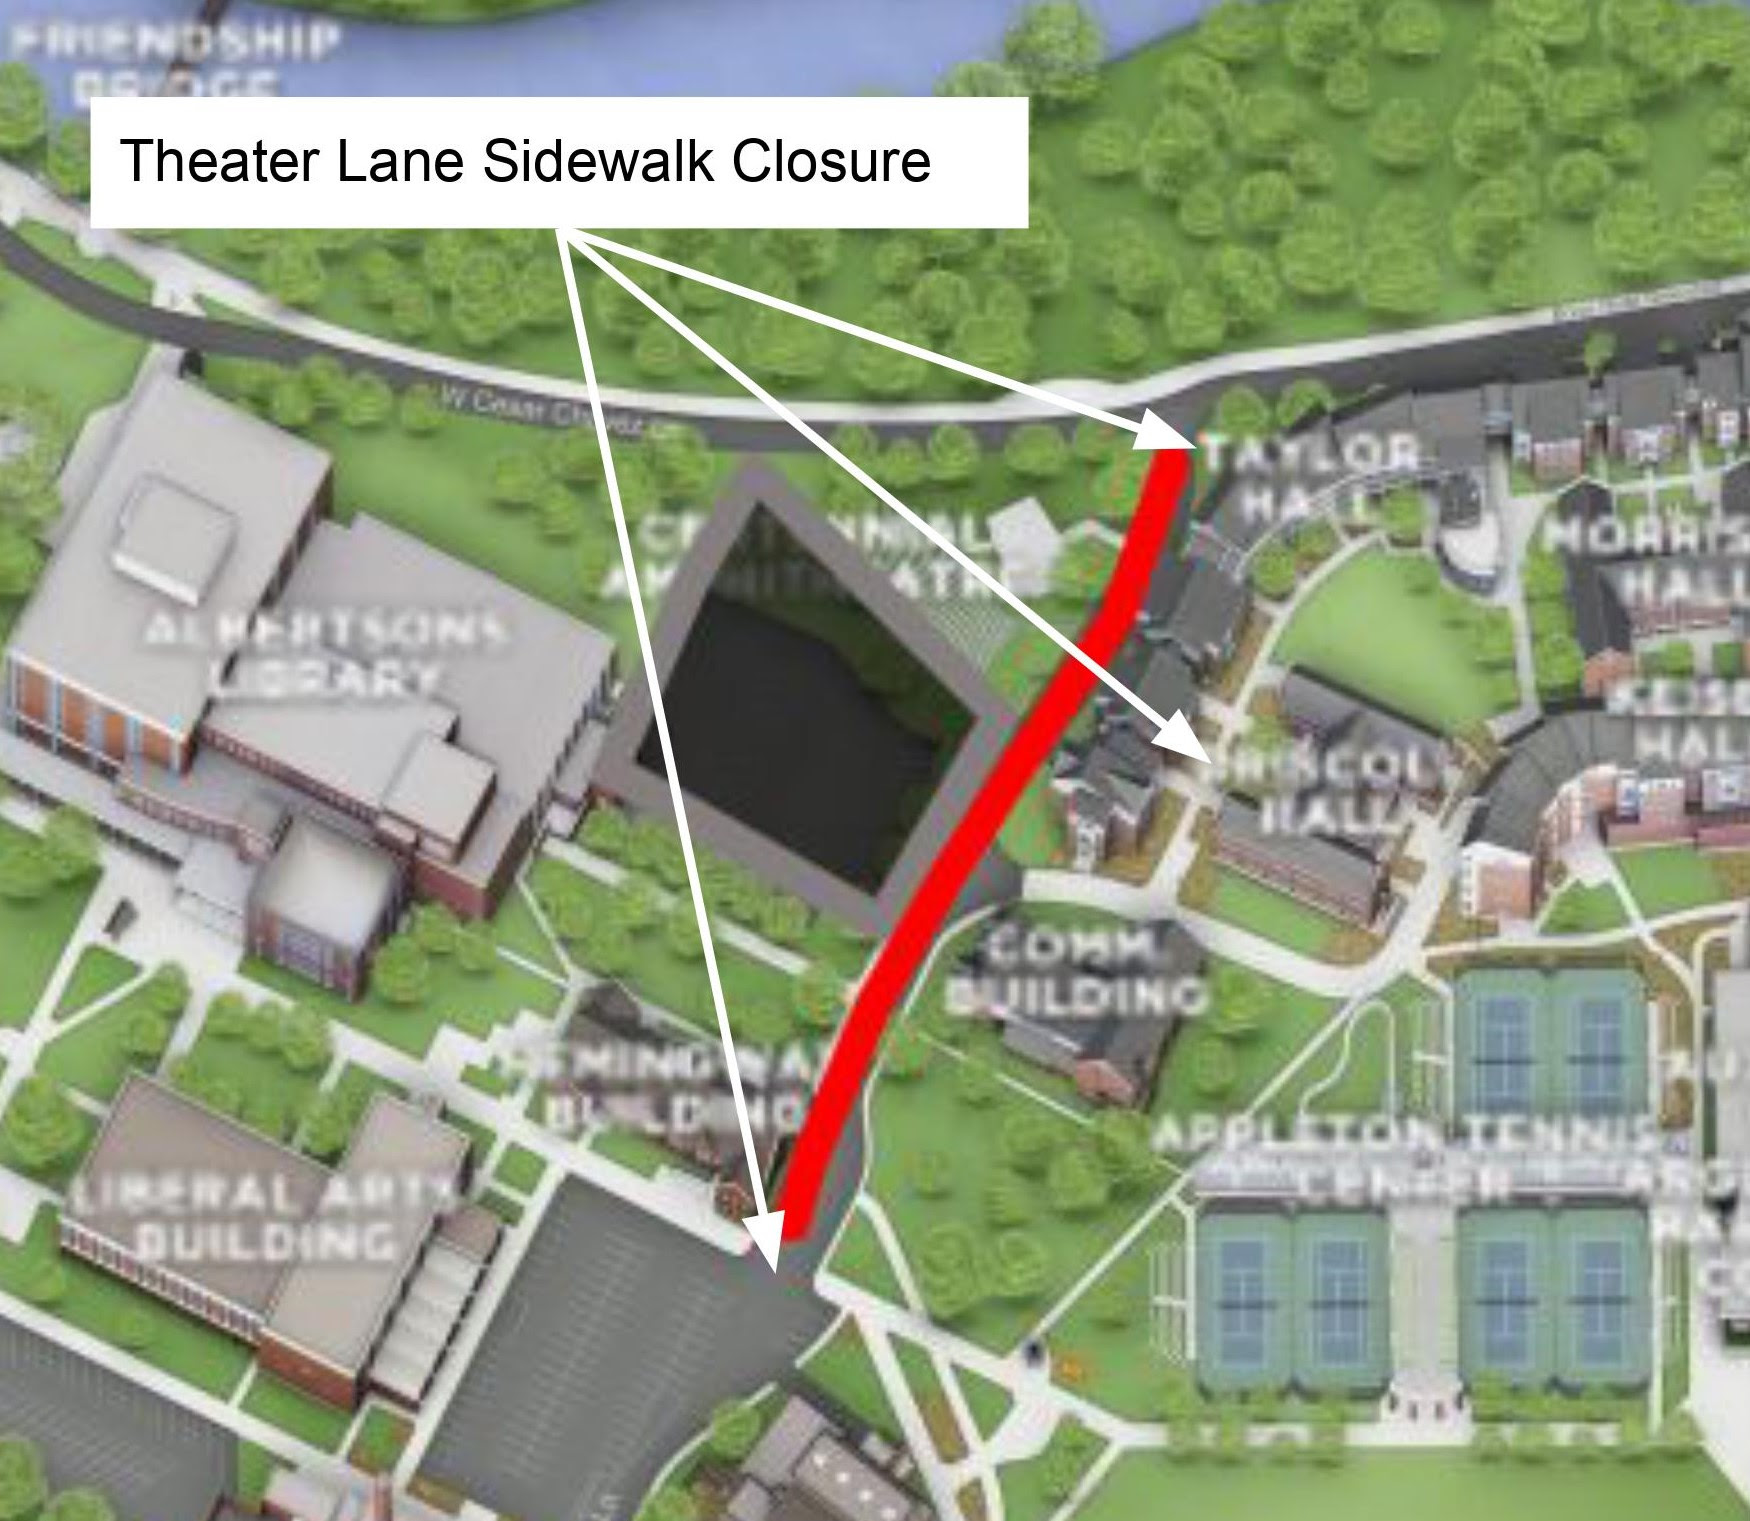 Theater lane sidewalk closure map